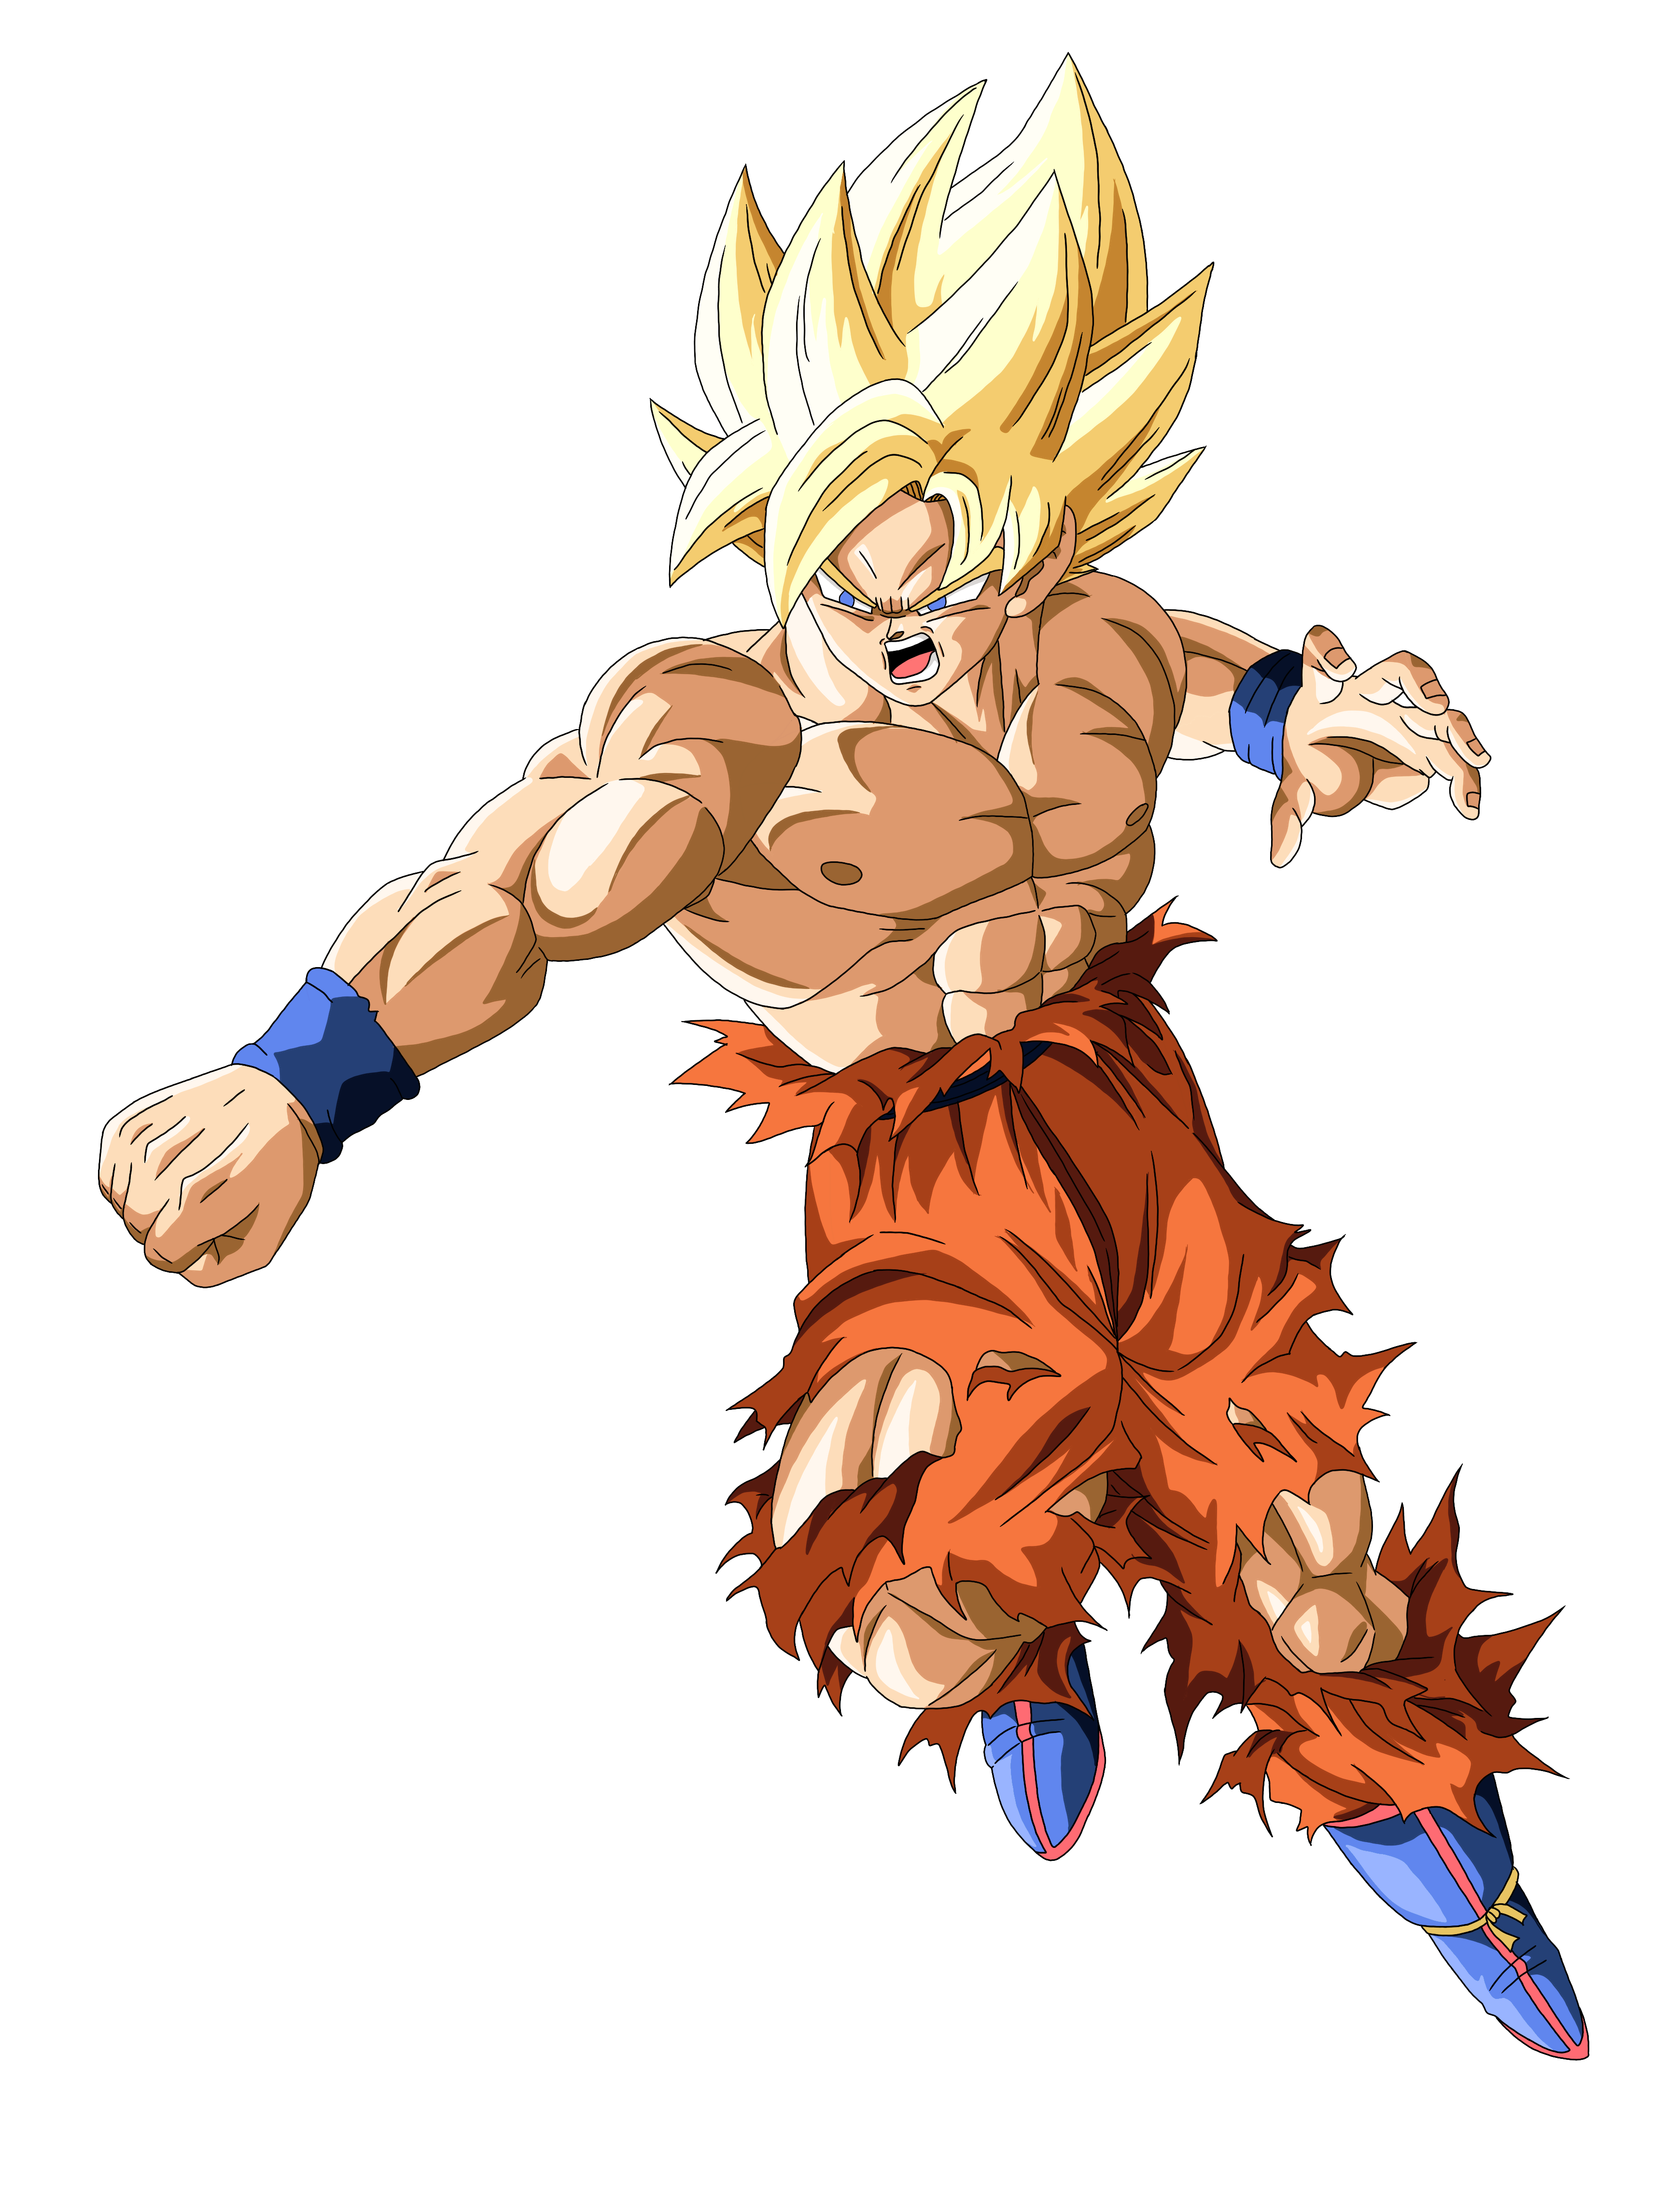 Super Saiyan Goku by carlthedog23 on DeviantArt